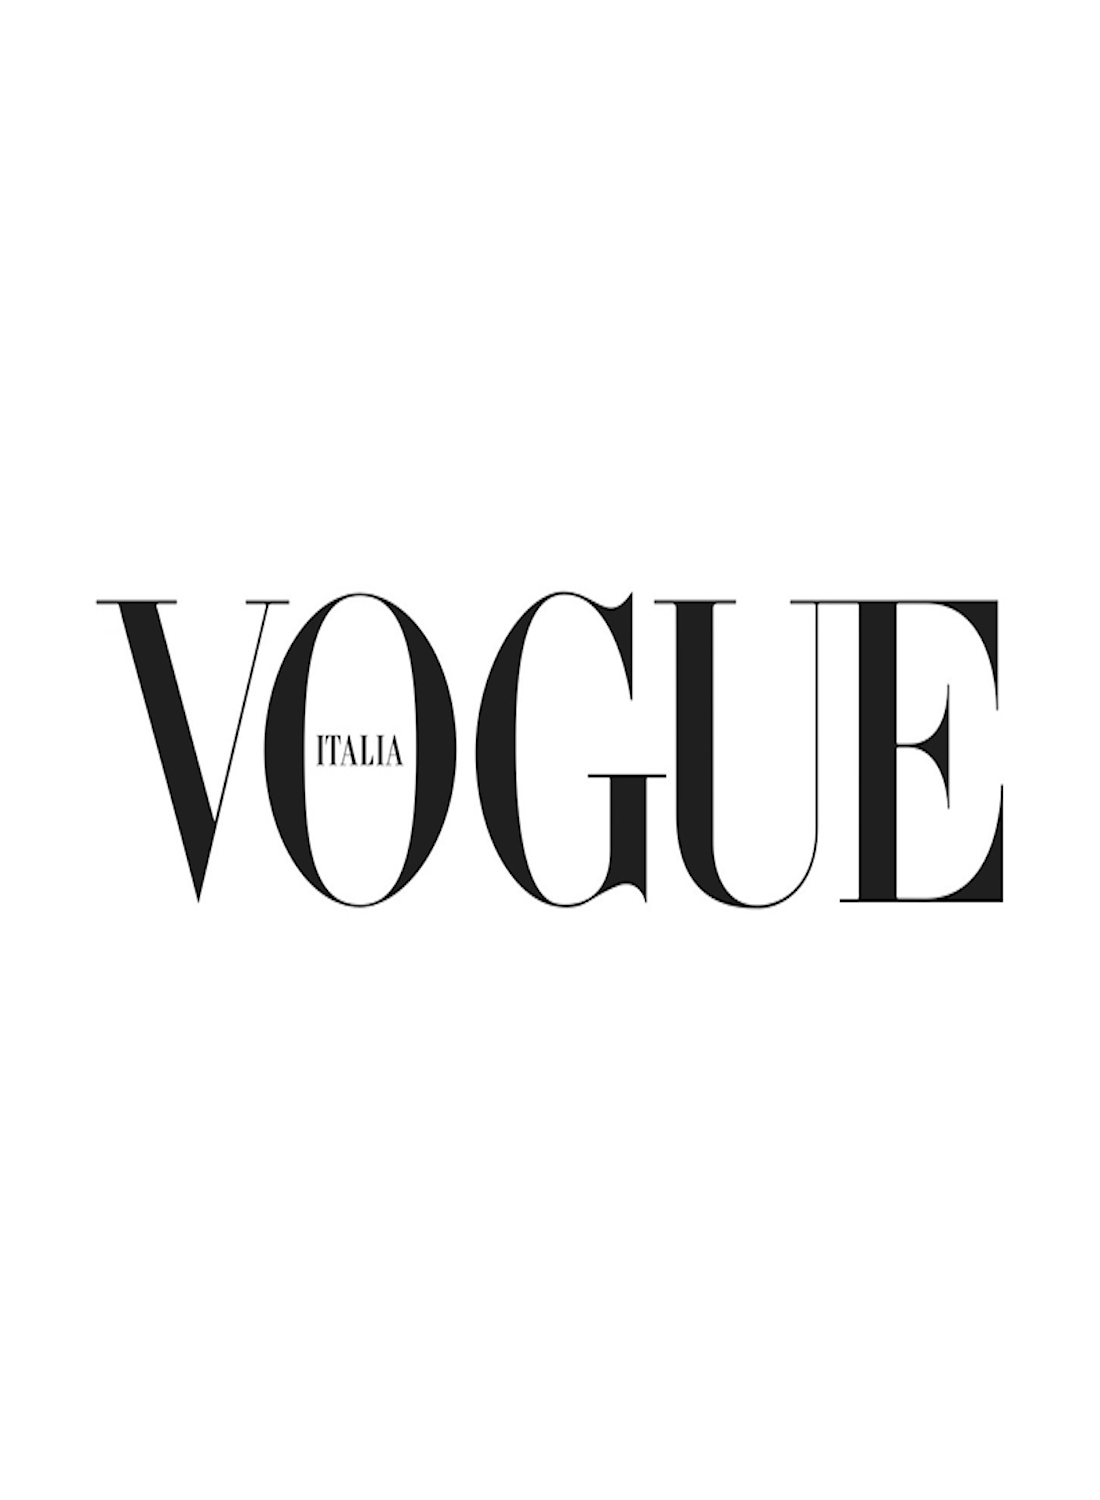 Vogue.it LOGO